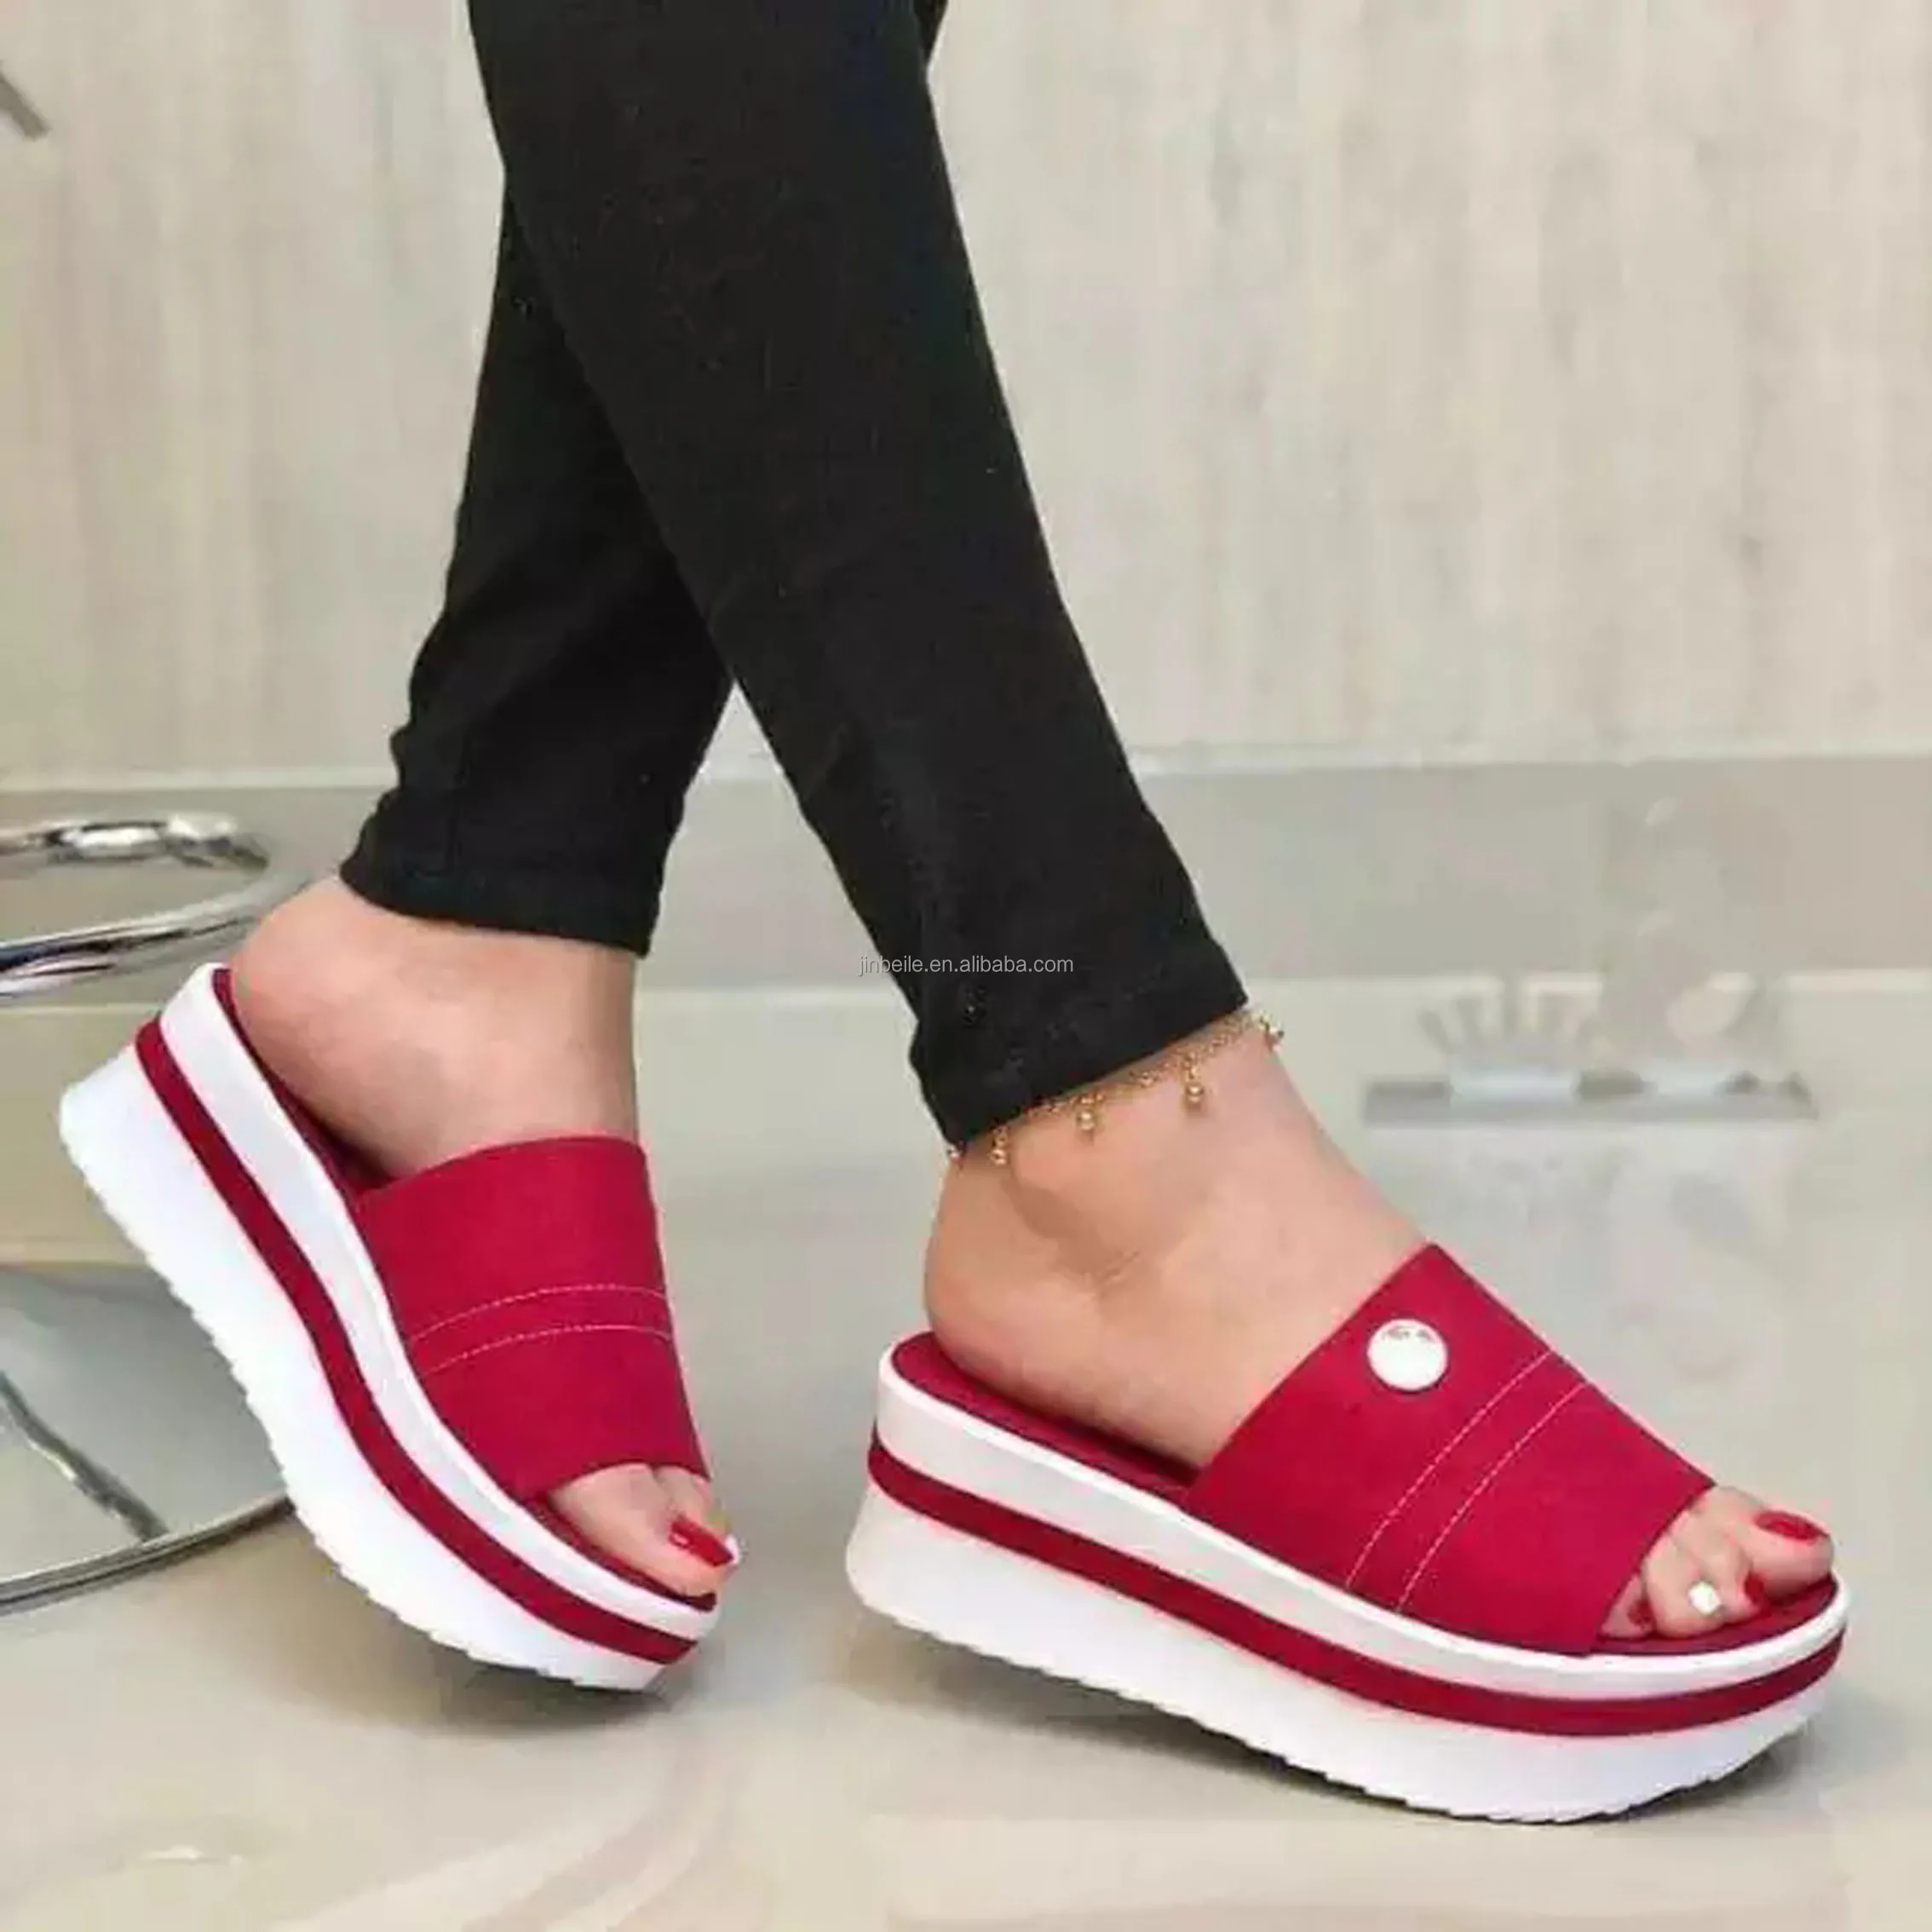 Platform Wedges Slippers Women Sandals 2021 New Female Shoes Fashion ...